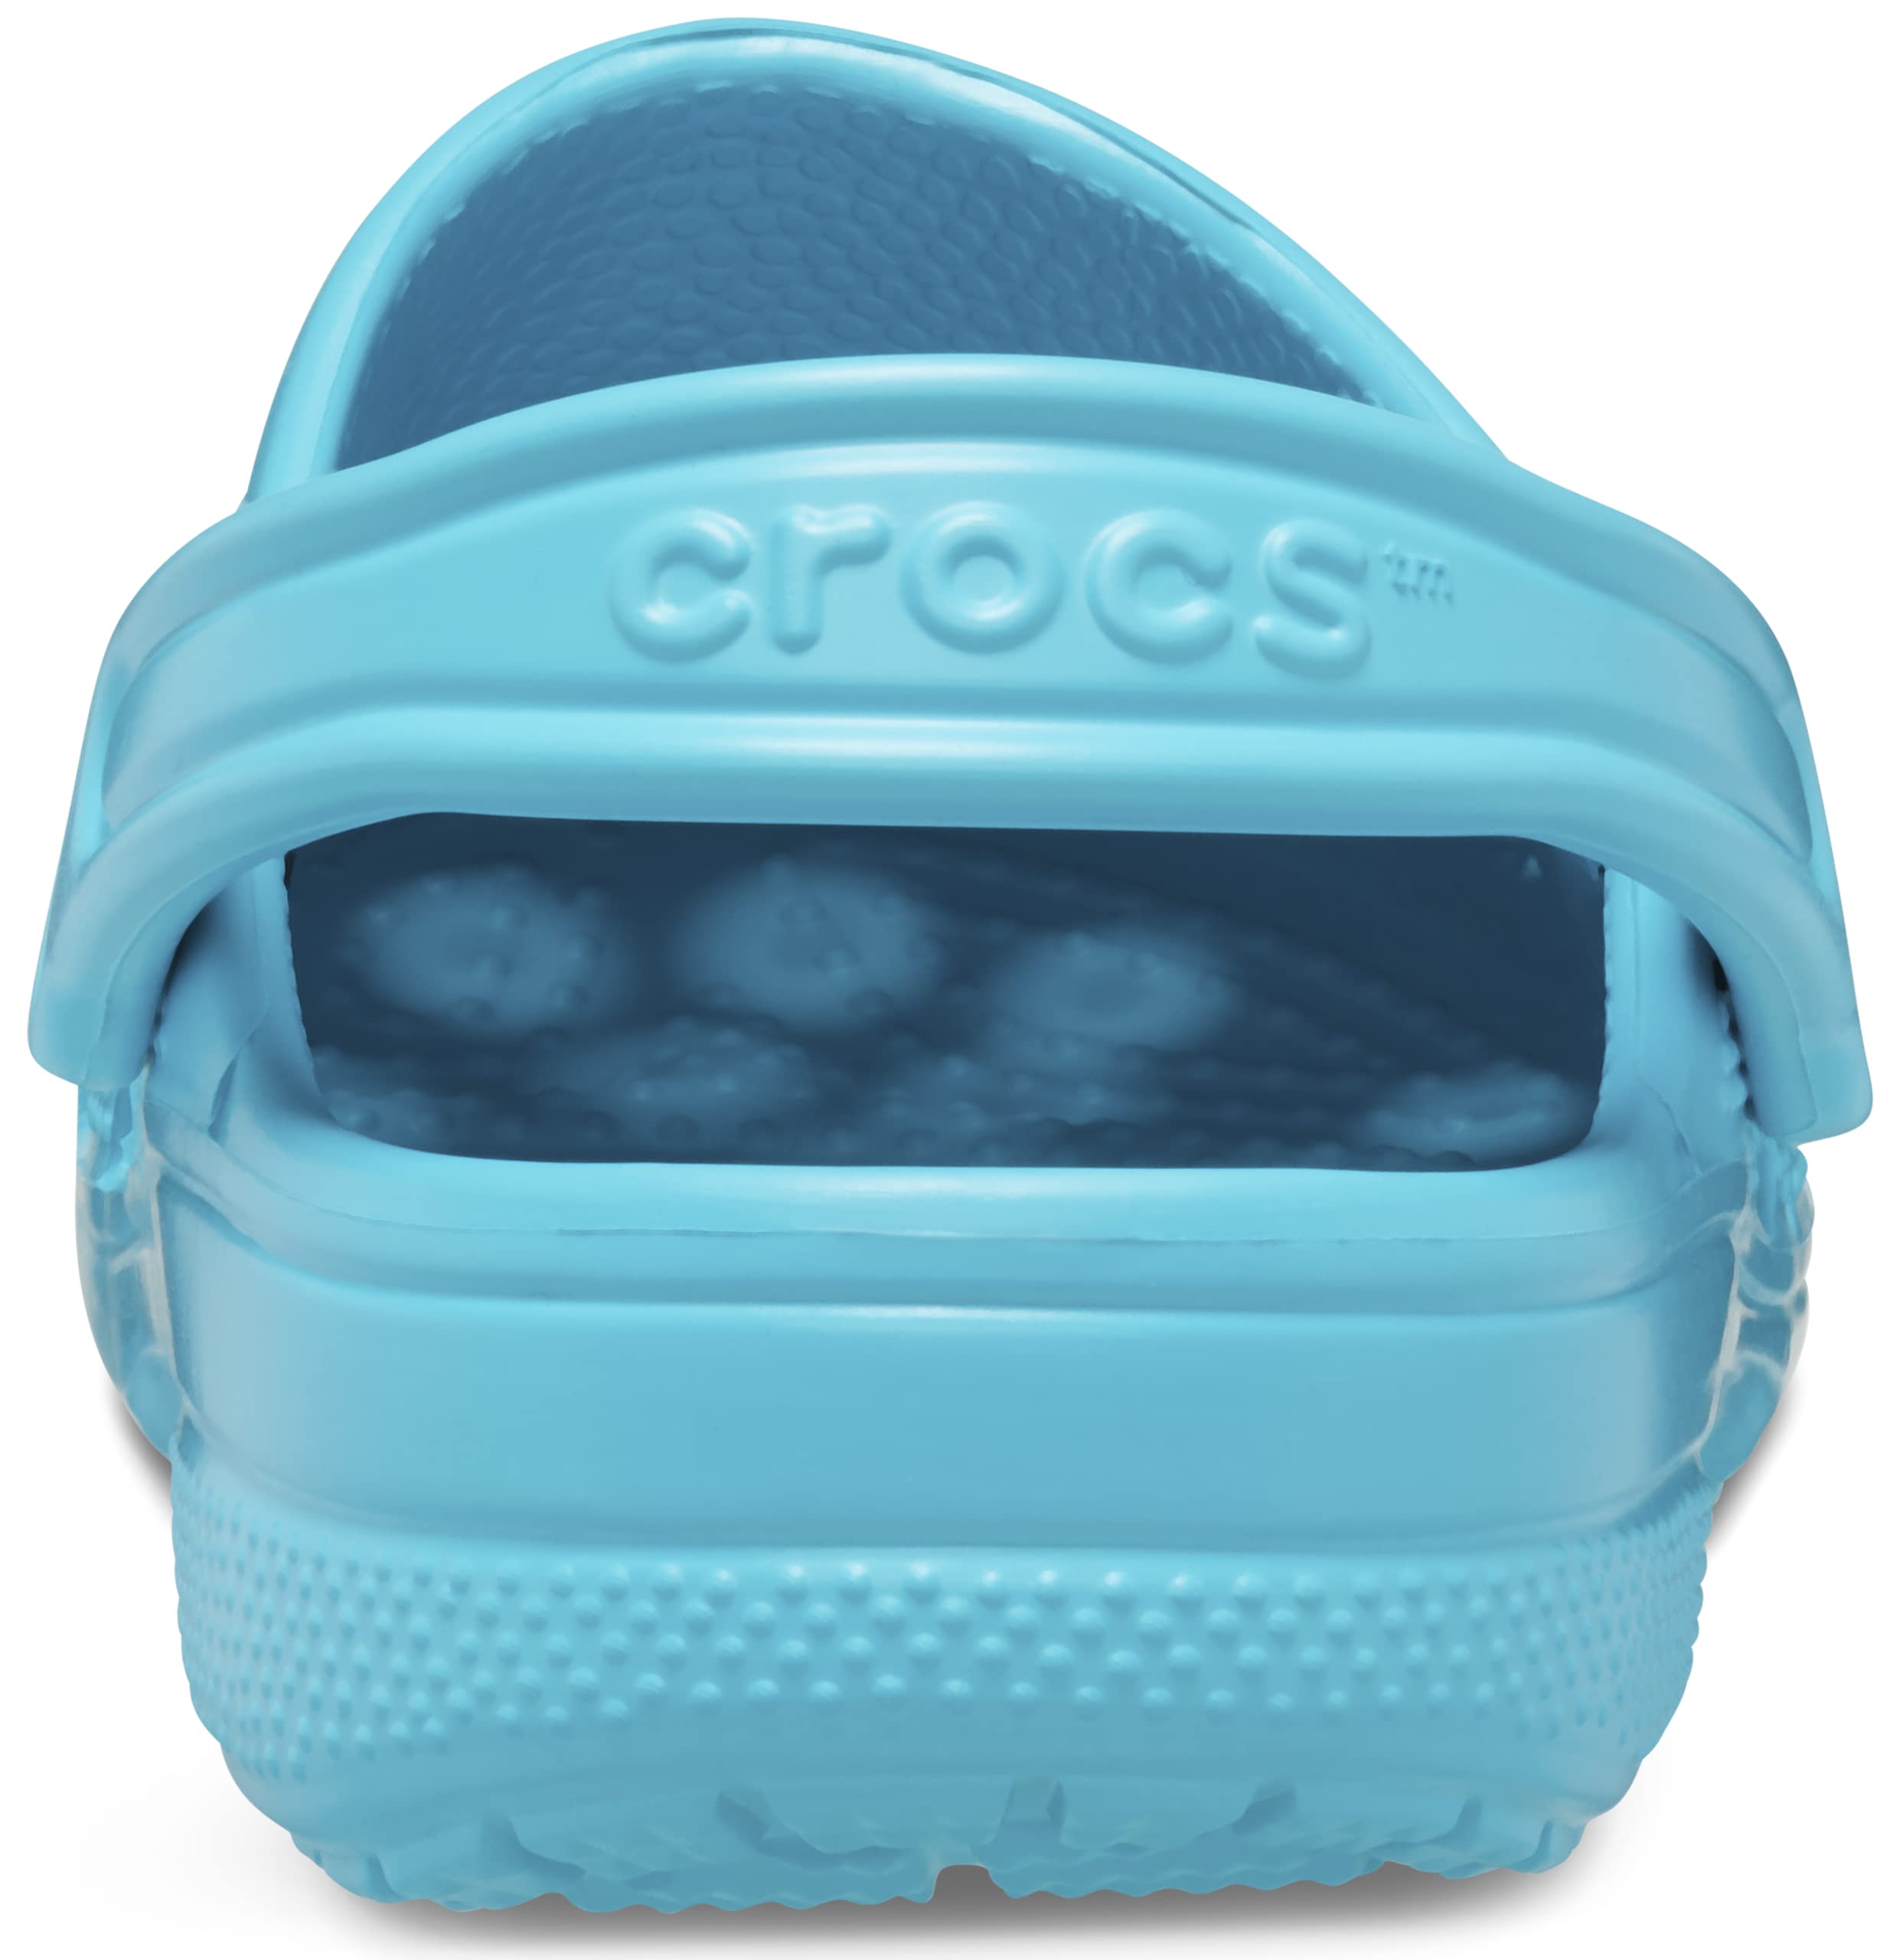 Crocs Unisex-Adult Baya Clogs